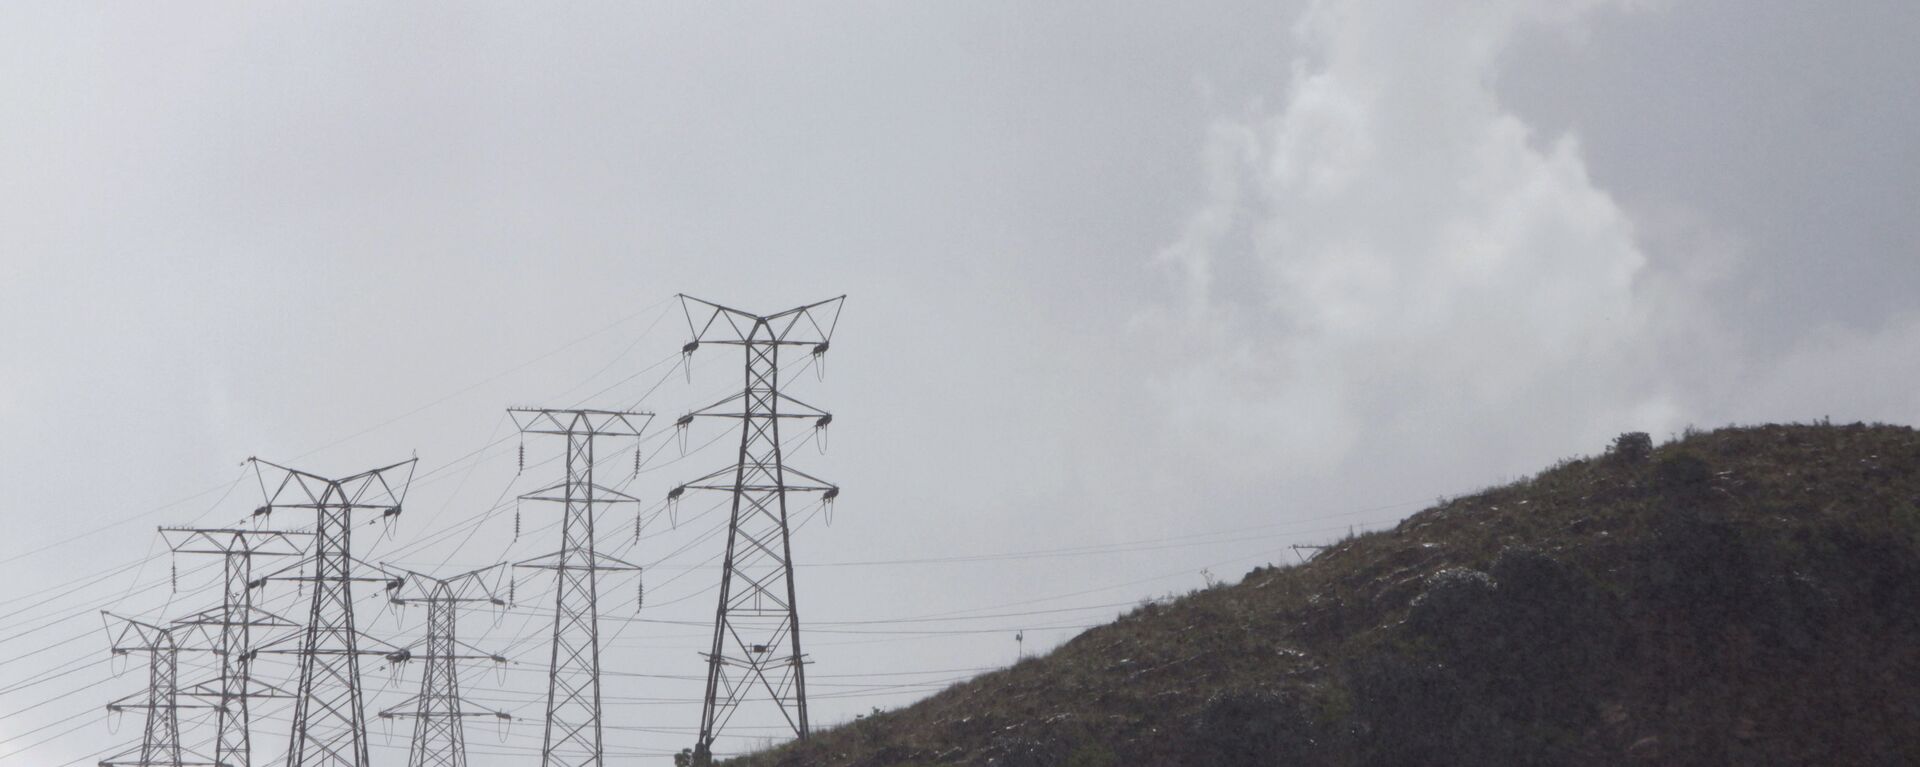 Eskom's electricity pylons snake across a hill in a Johannesburg suburb - Sputnik International, 1920, 18.05.2019